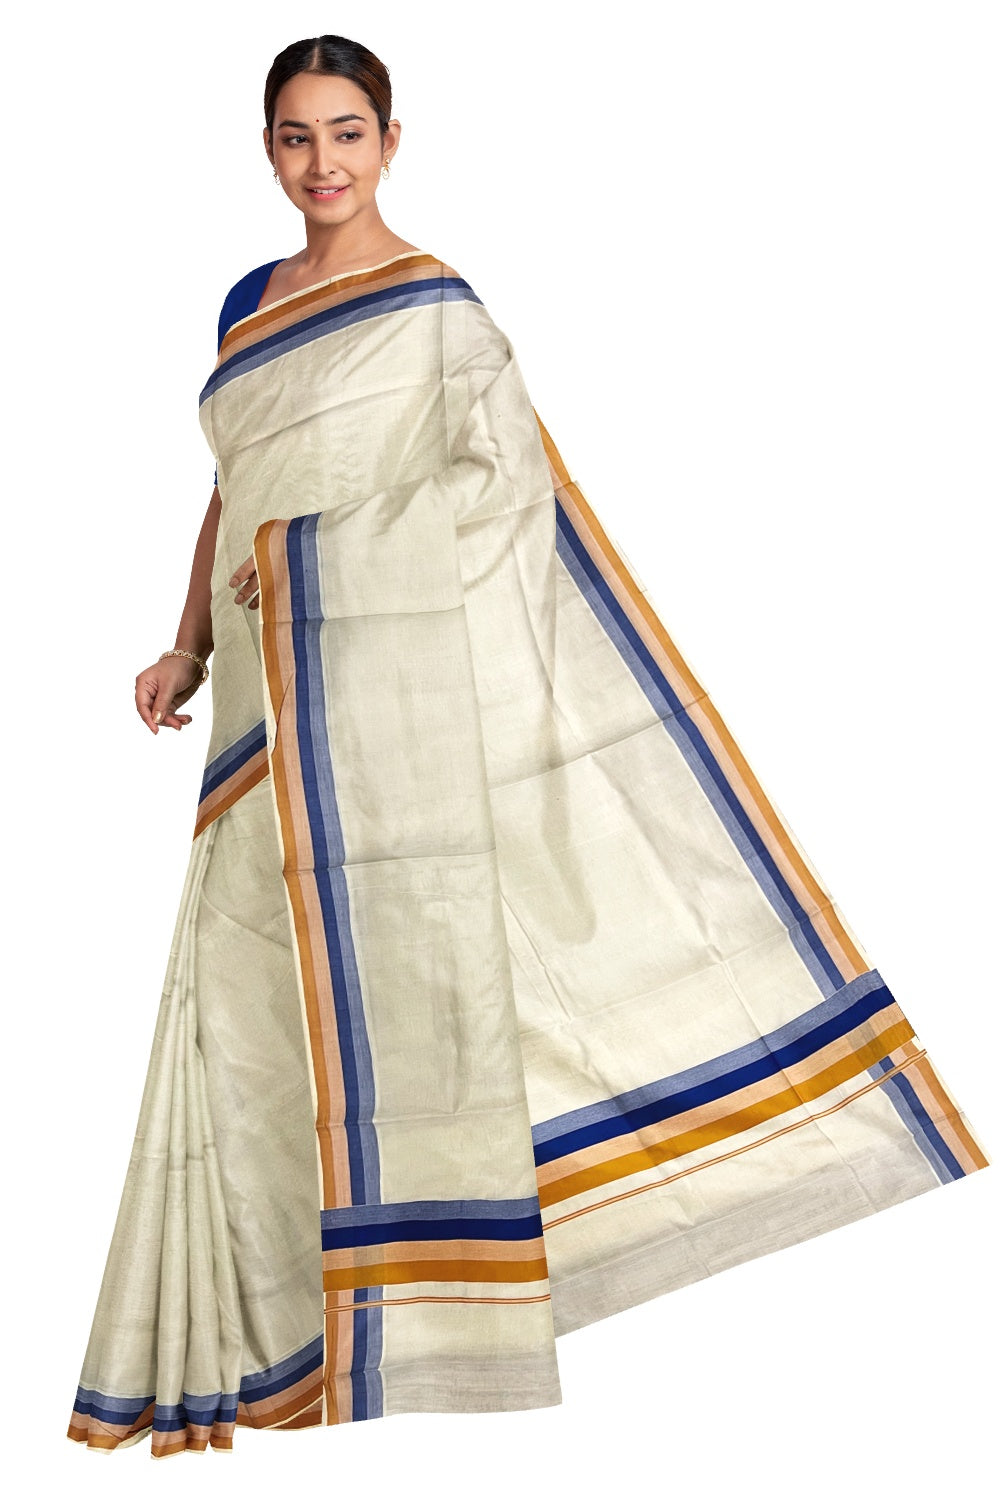 Kerala Cotton Saree with Blue and Orange Lines Border Design